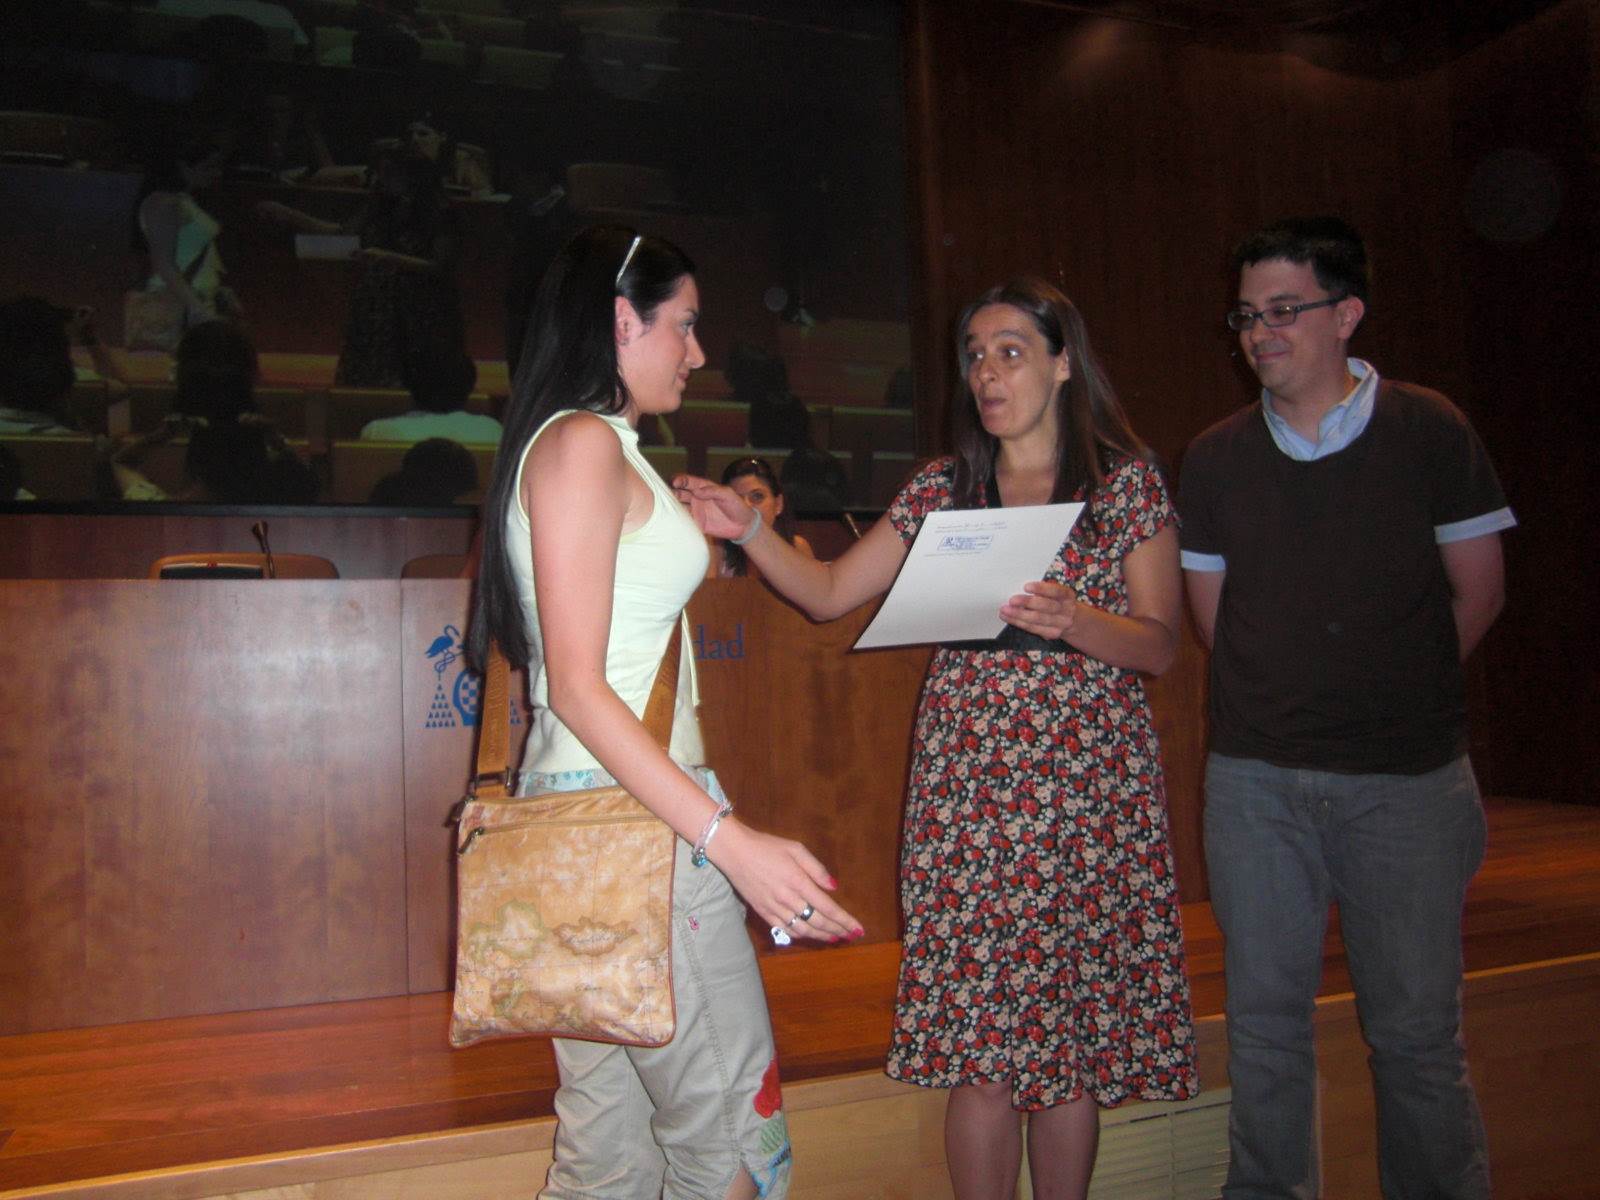 Entrega de diplomas (julio 2009)